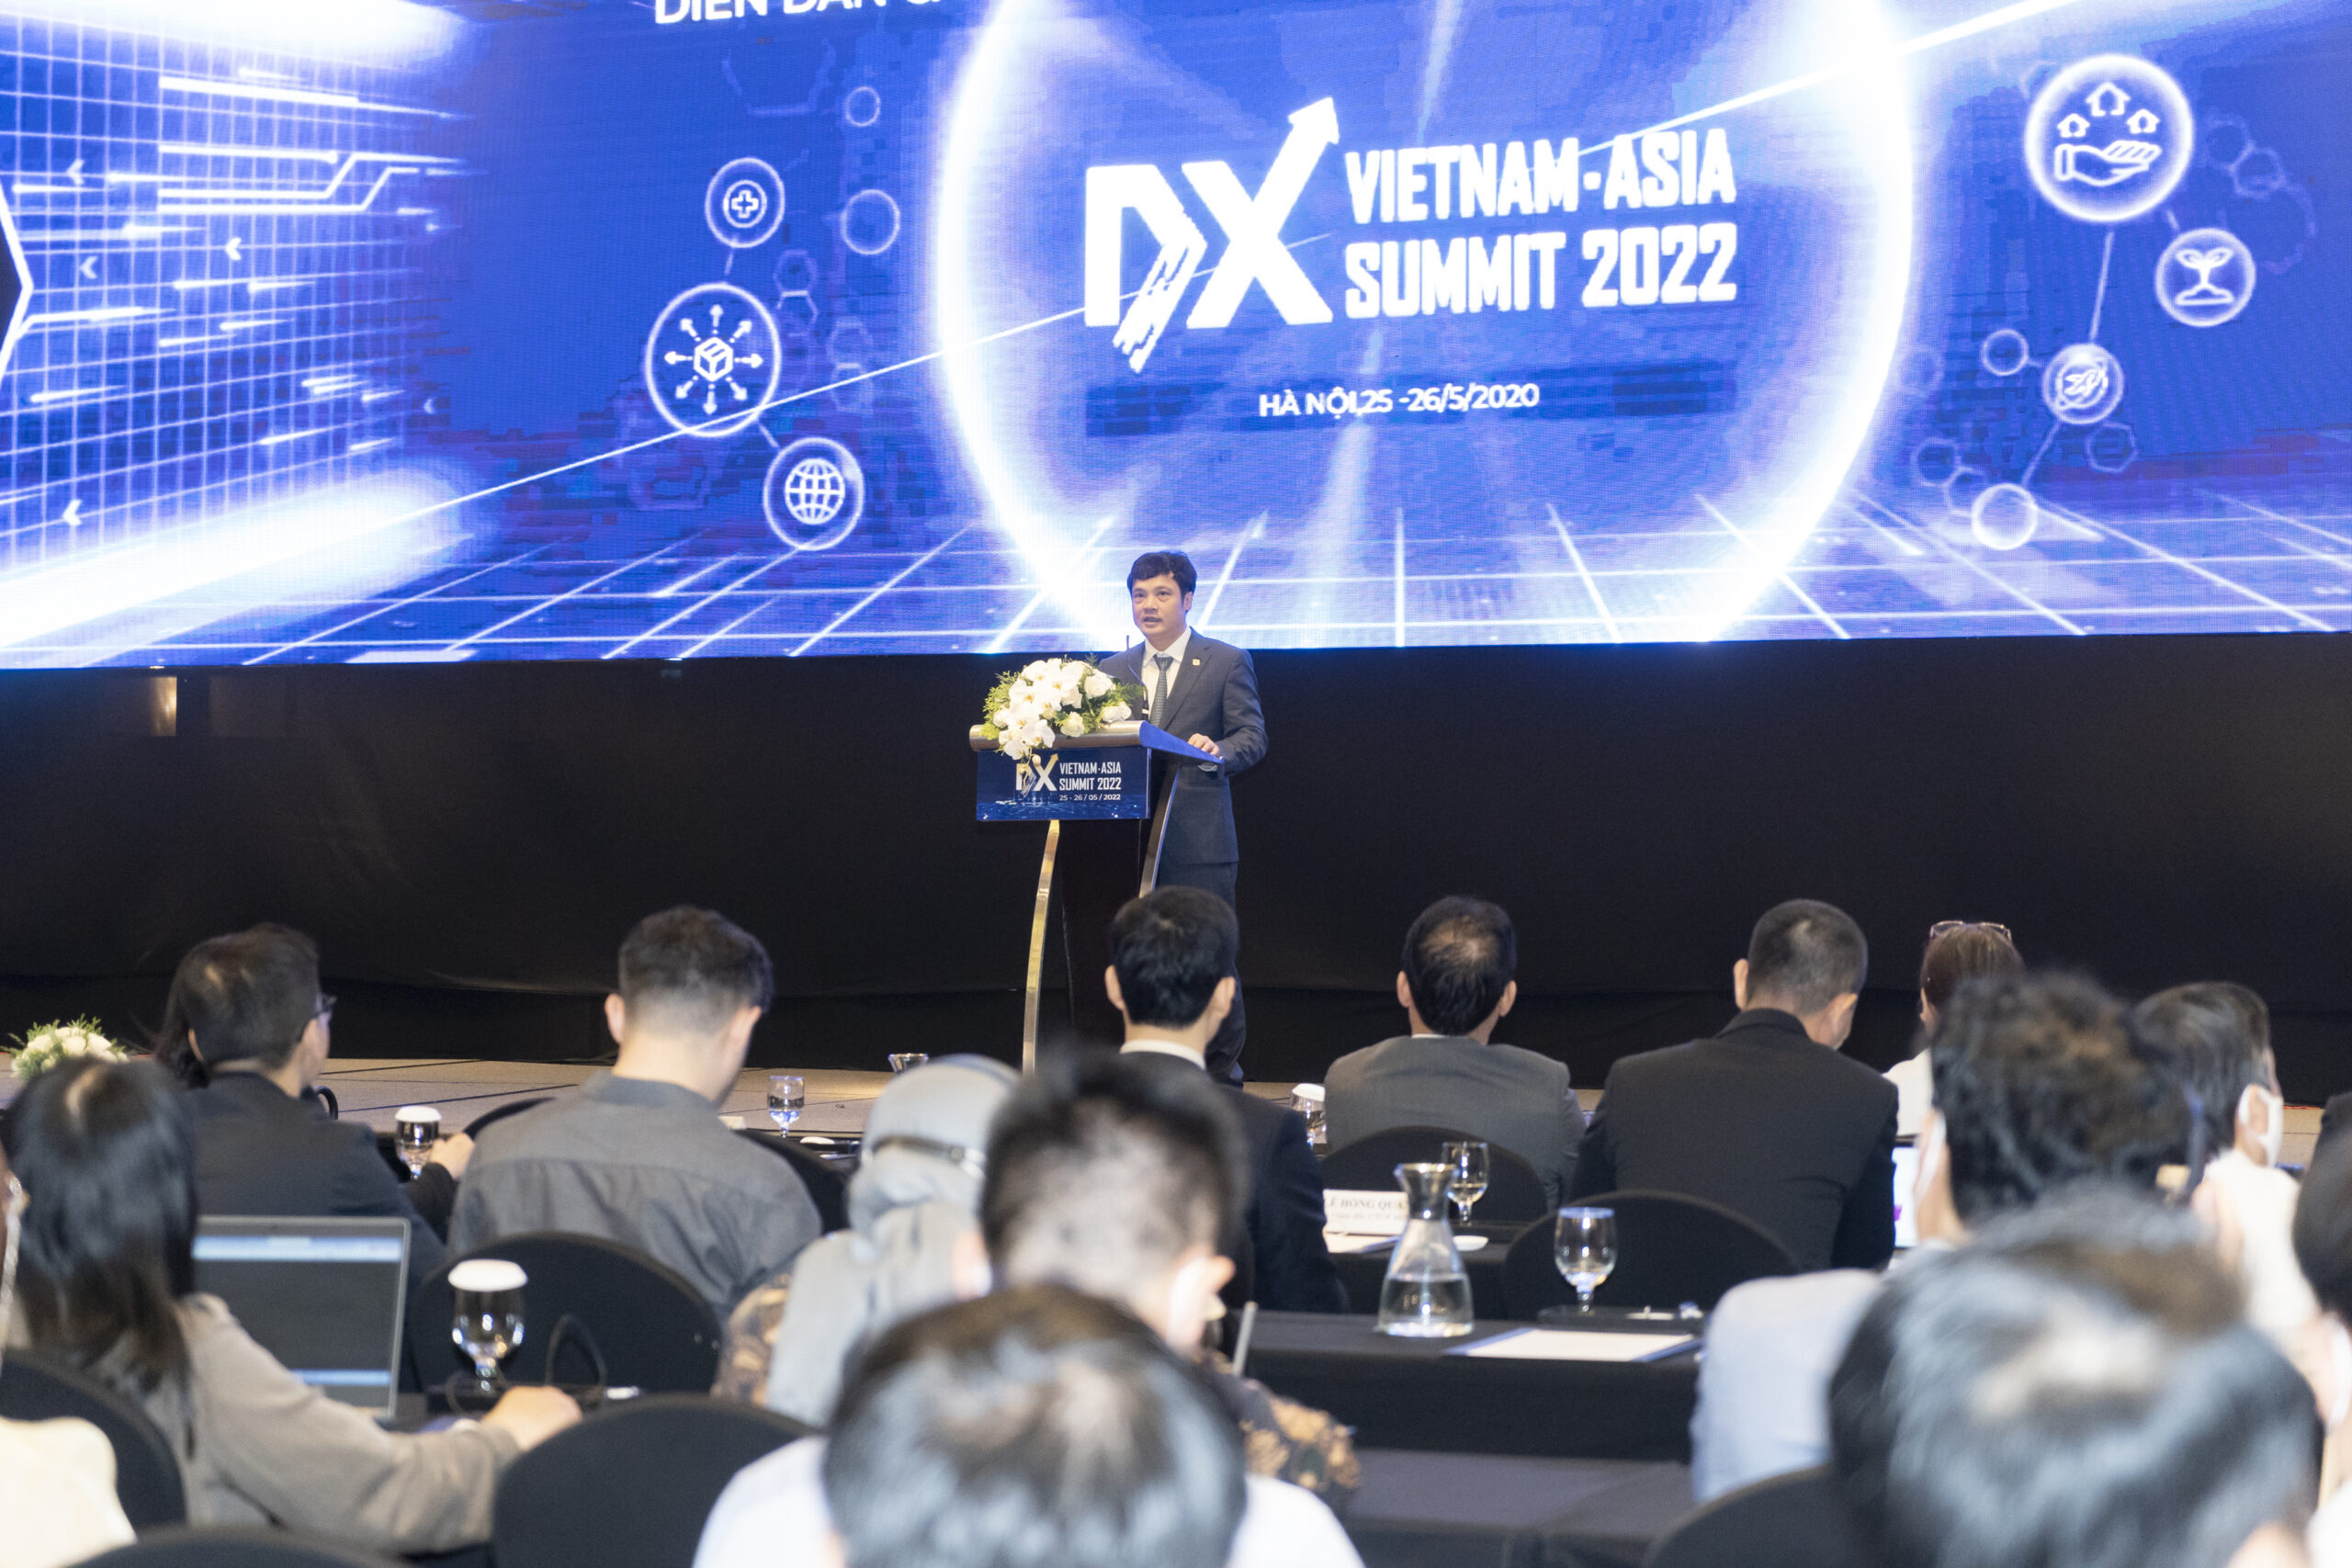 Synnex FPT and IBM sponsor Vietnam – ASIA DX Summit 2022